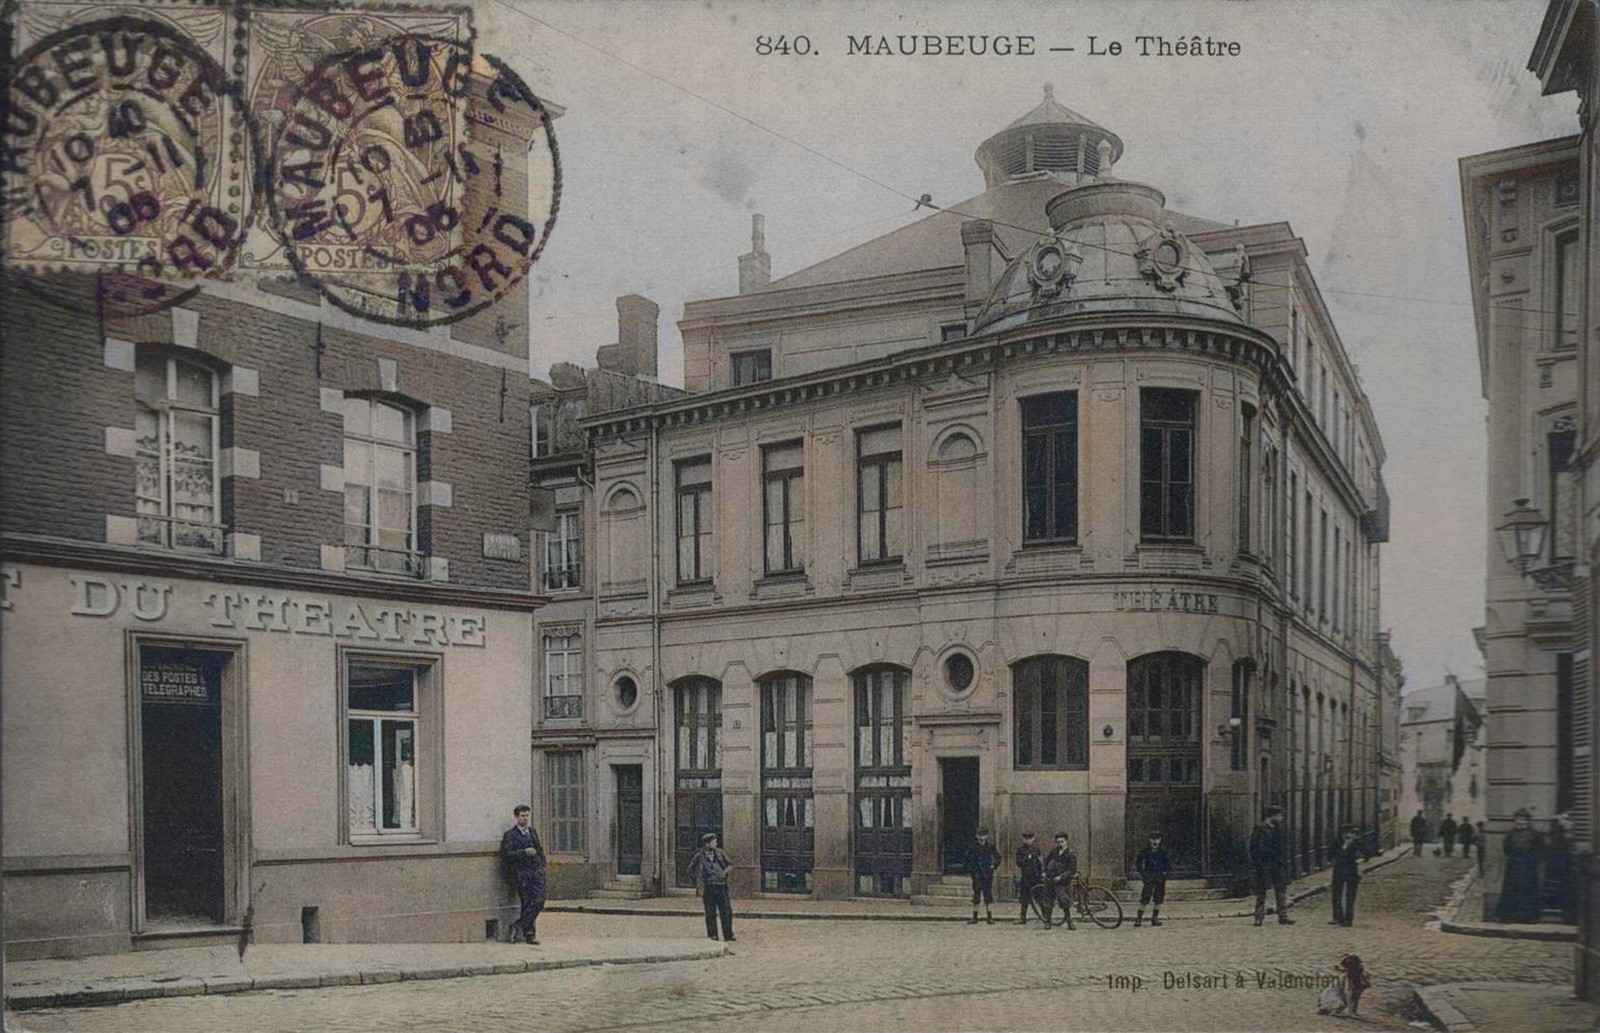 L'ancien théâtre de Maubeuge